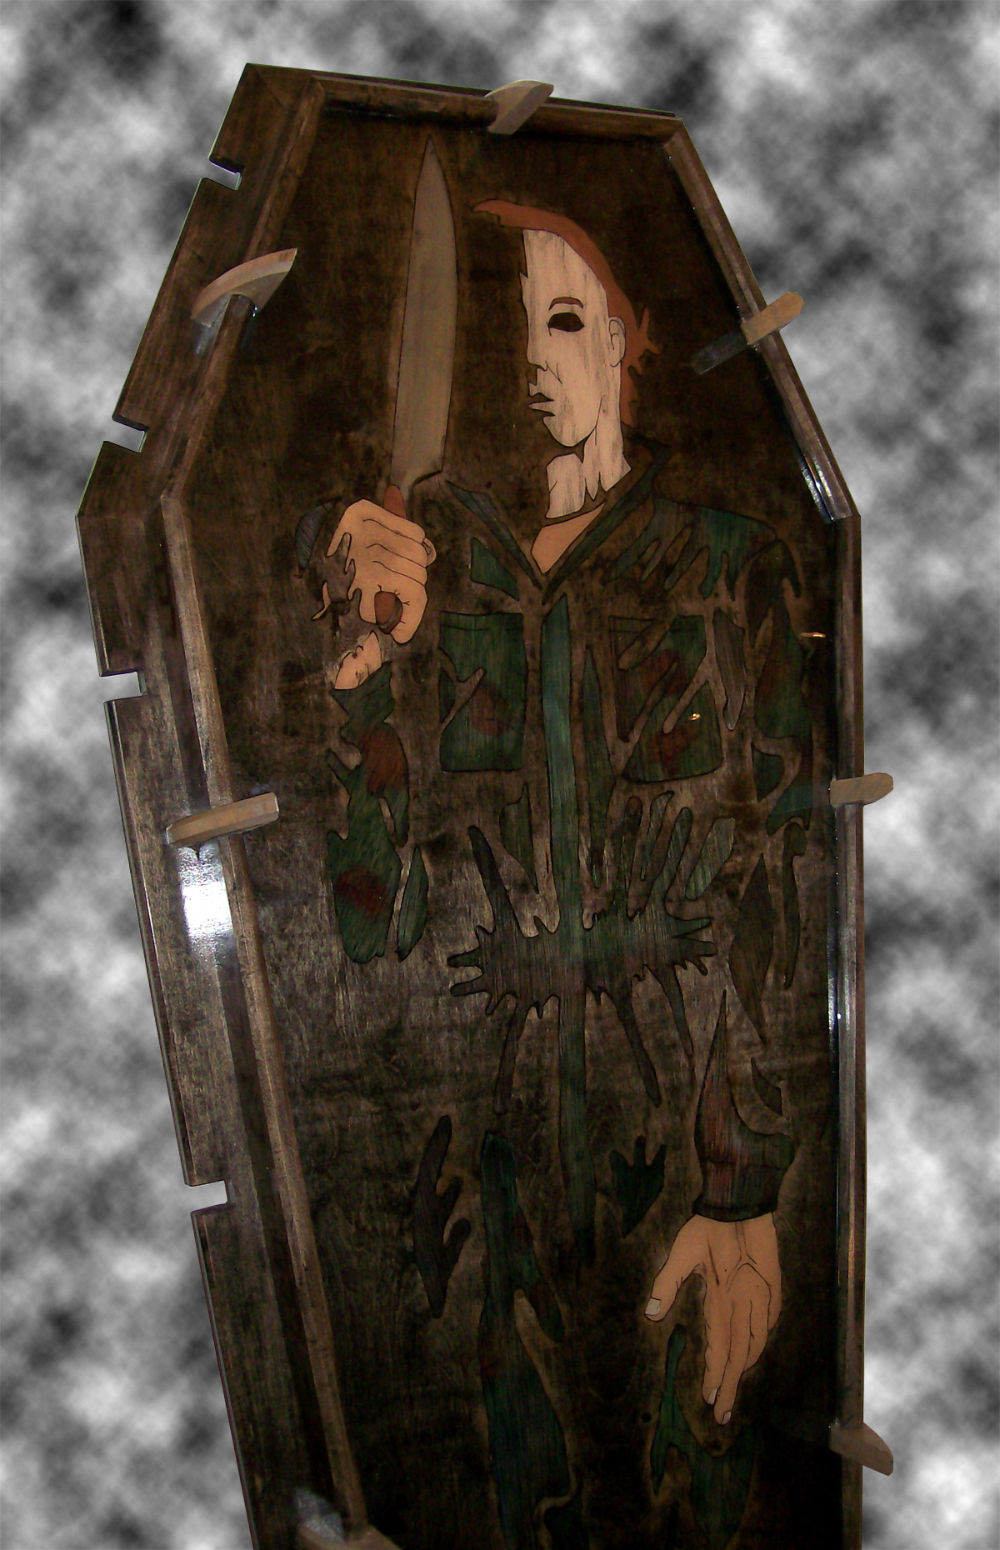 The Halloween Coffin